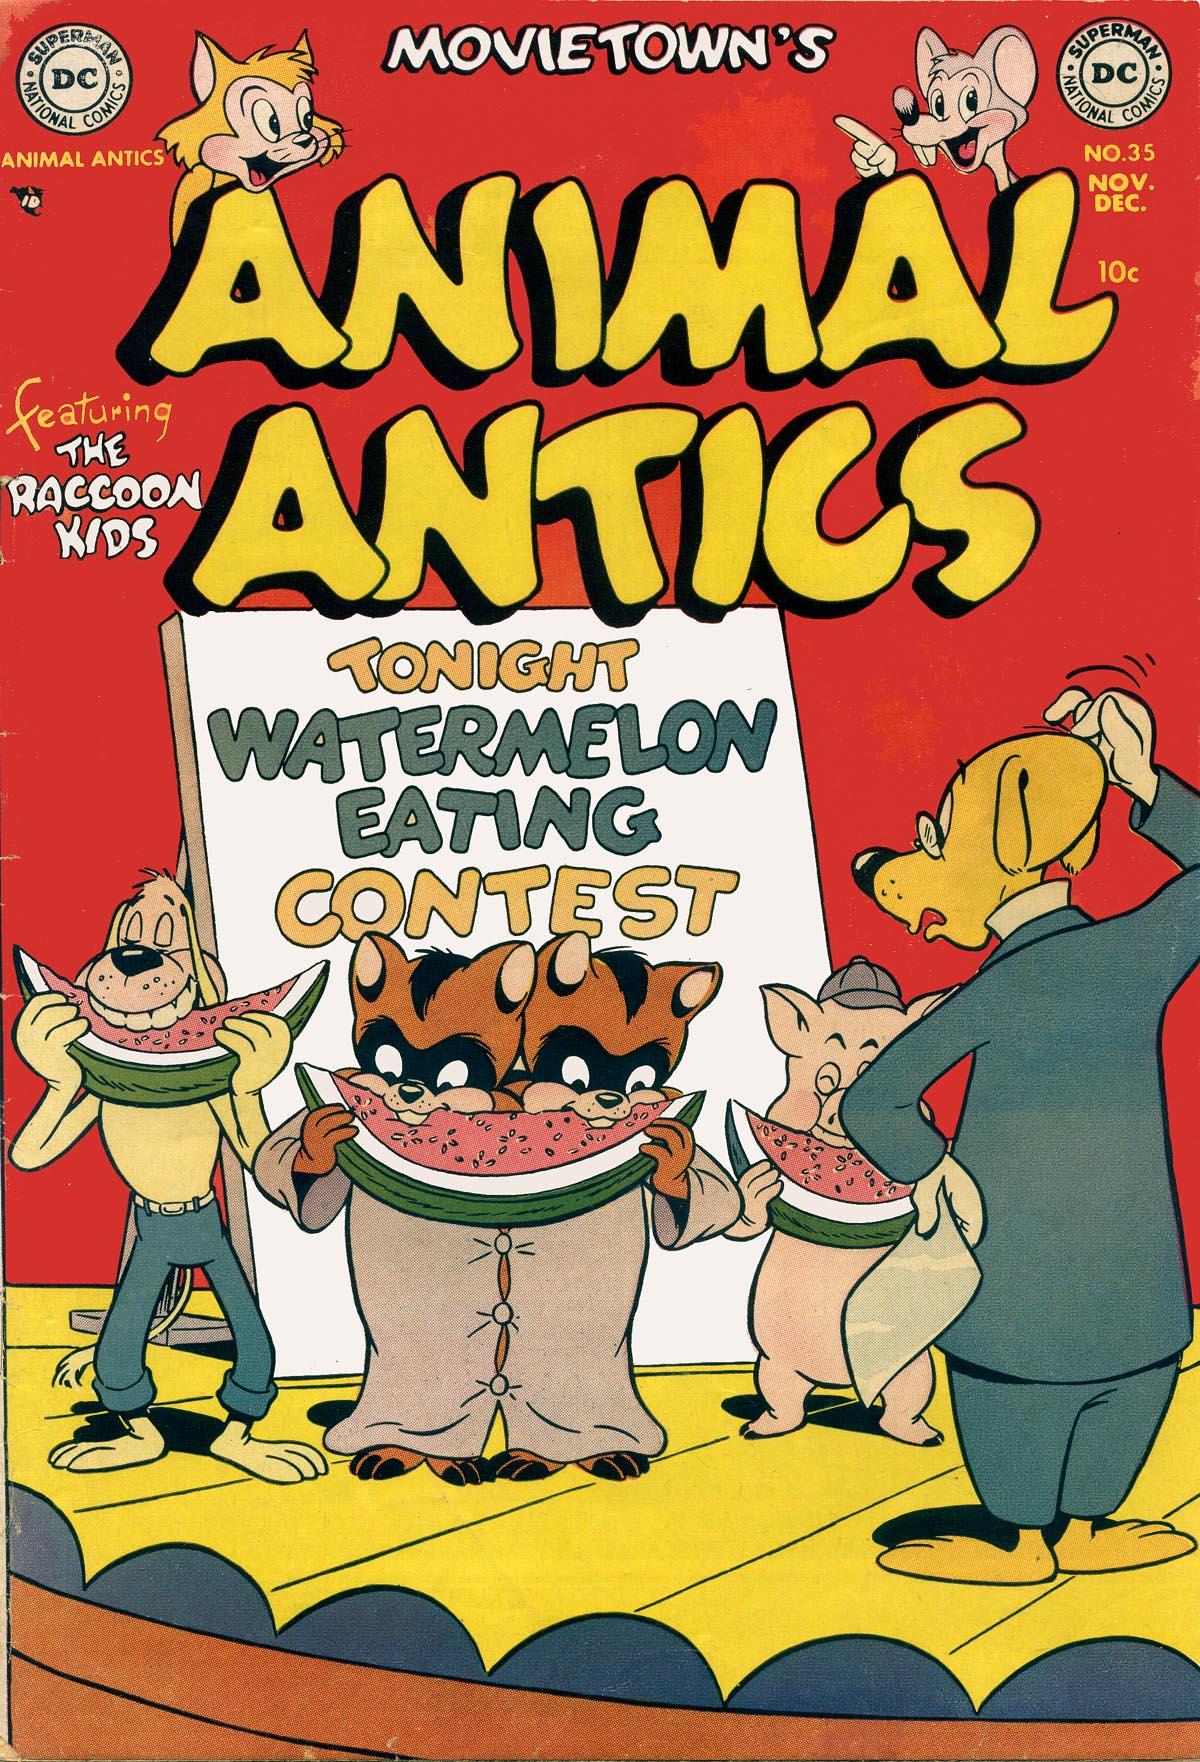 Movietown's Animal Antics Vol. 1 #35